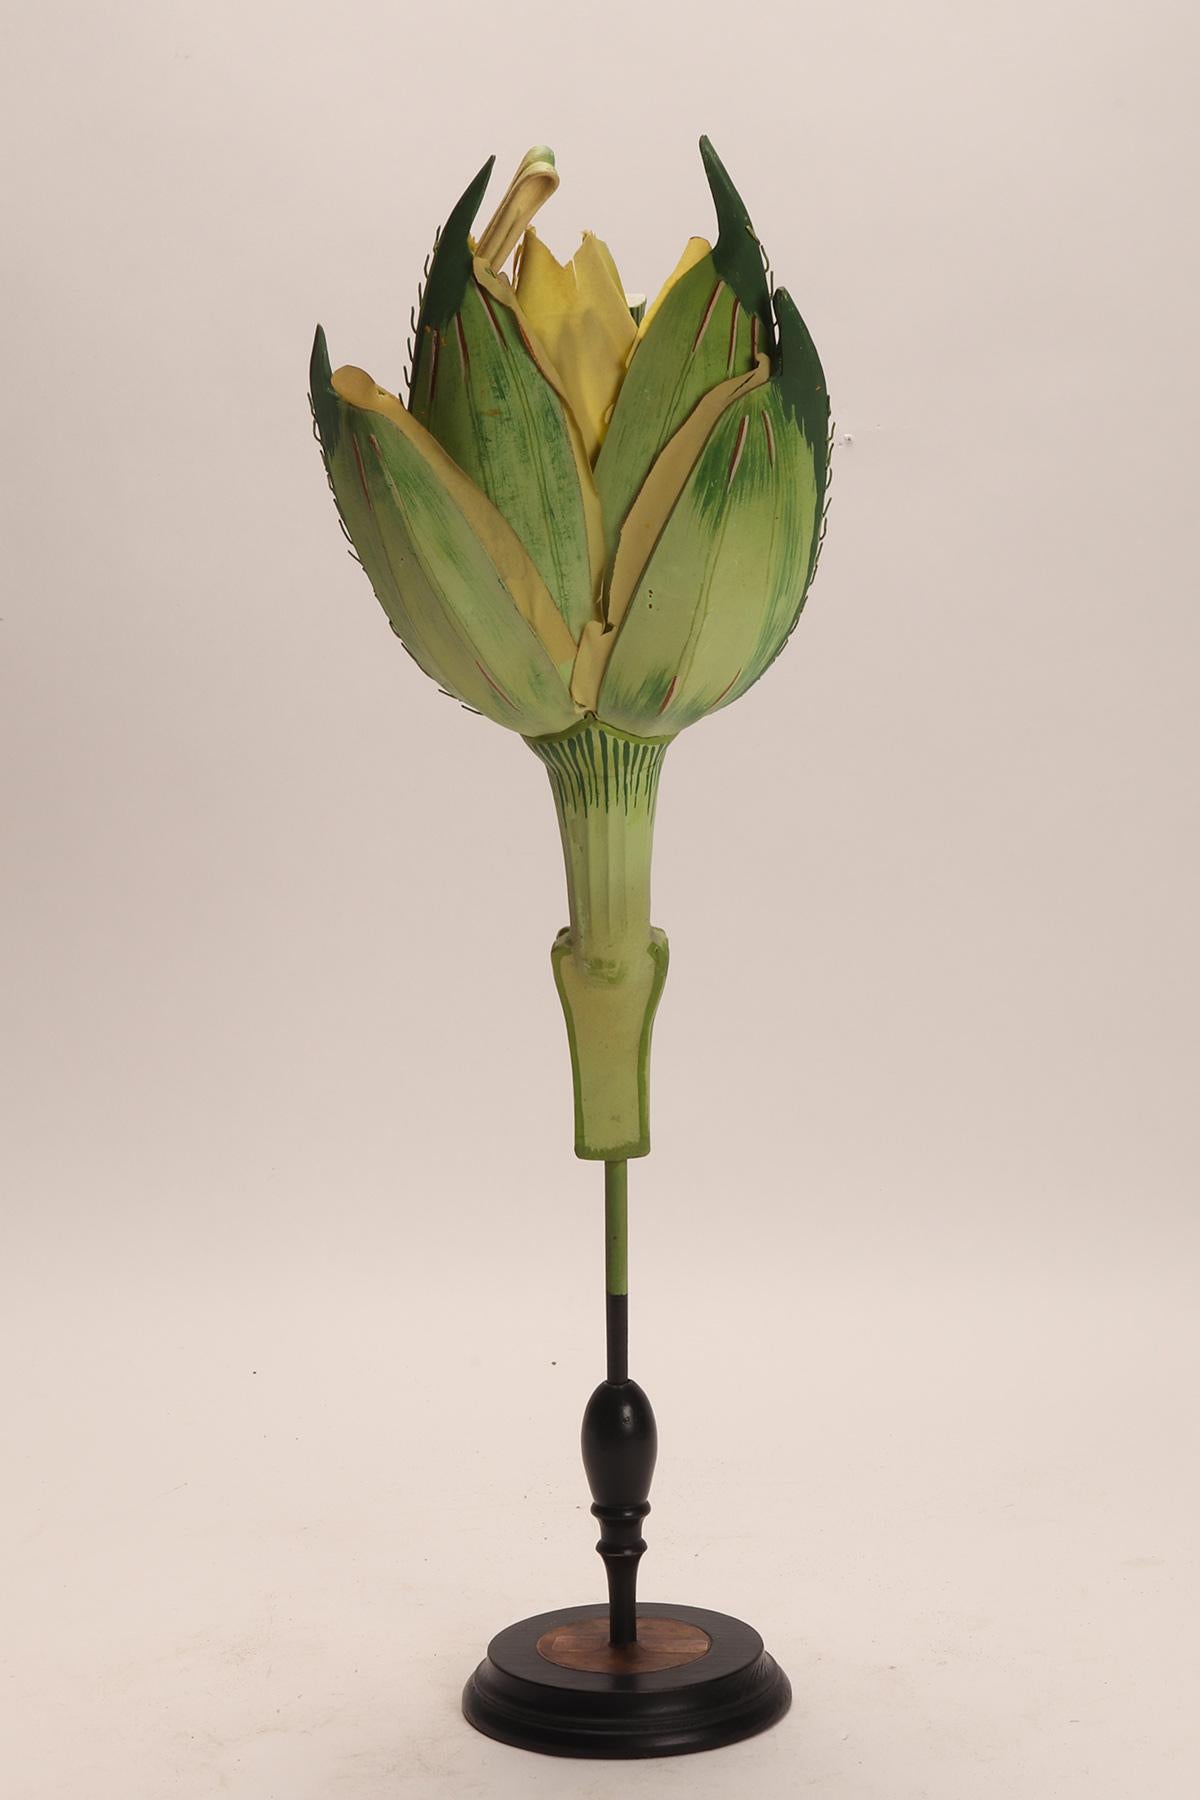 Metal Osterloh Botanic Model of a Wheat Flower, Germany, 1900 For Sale